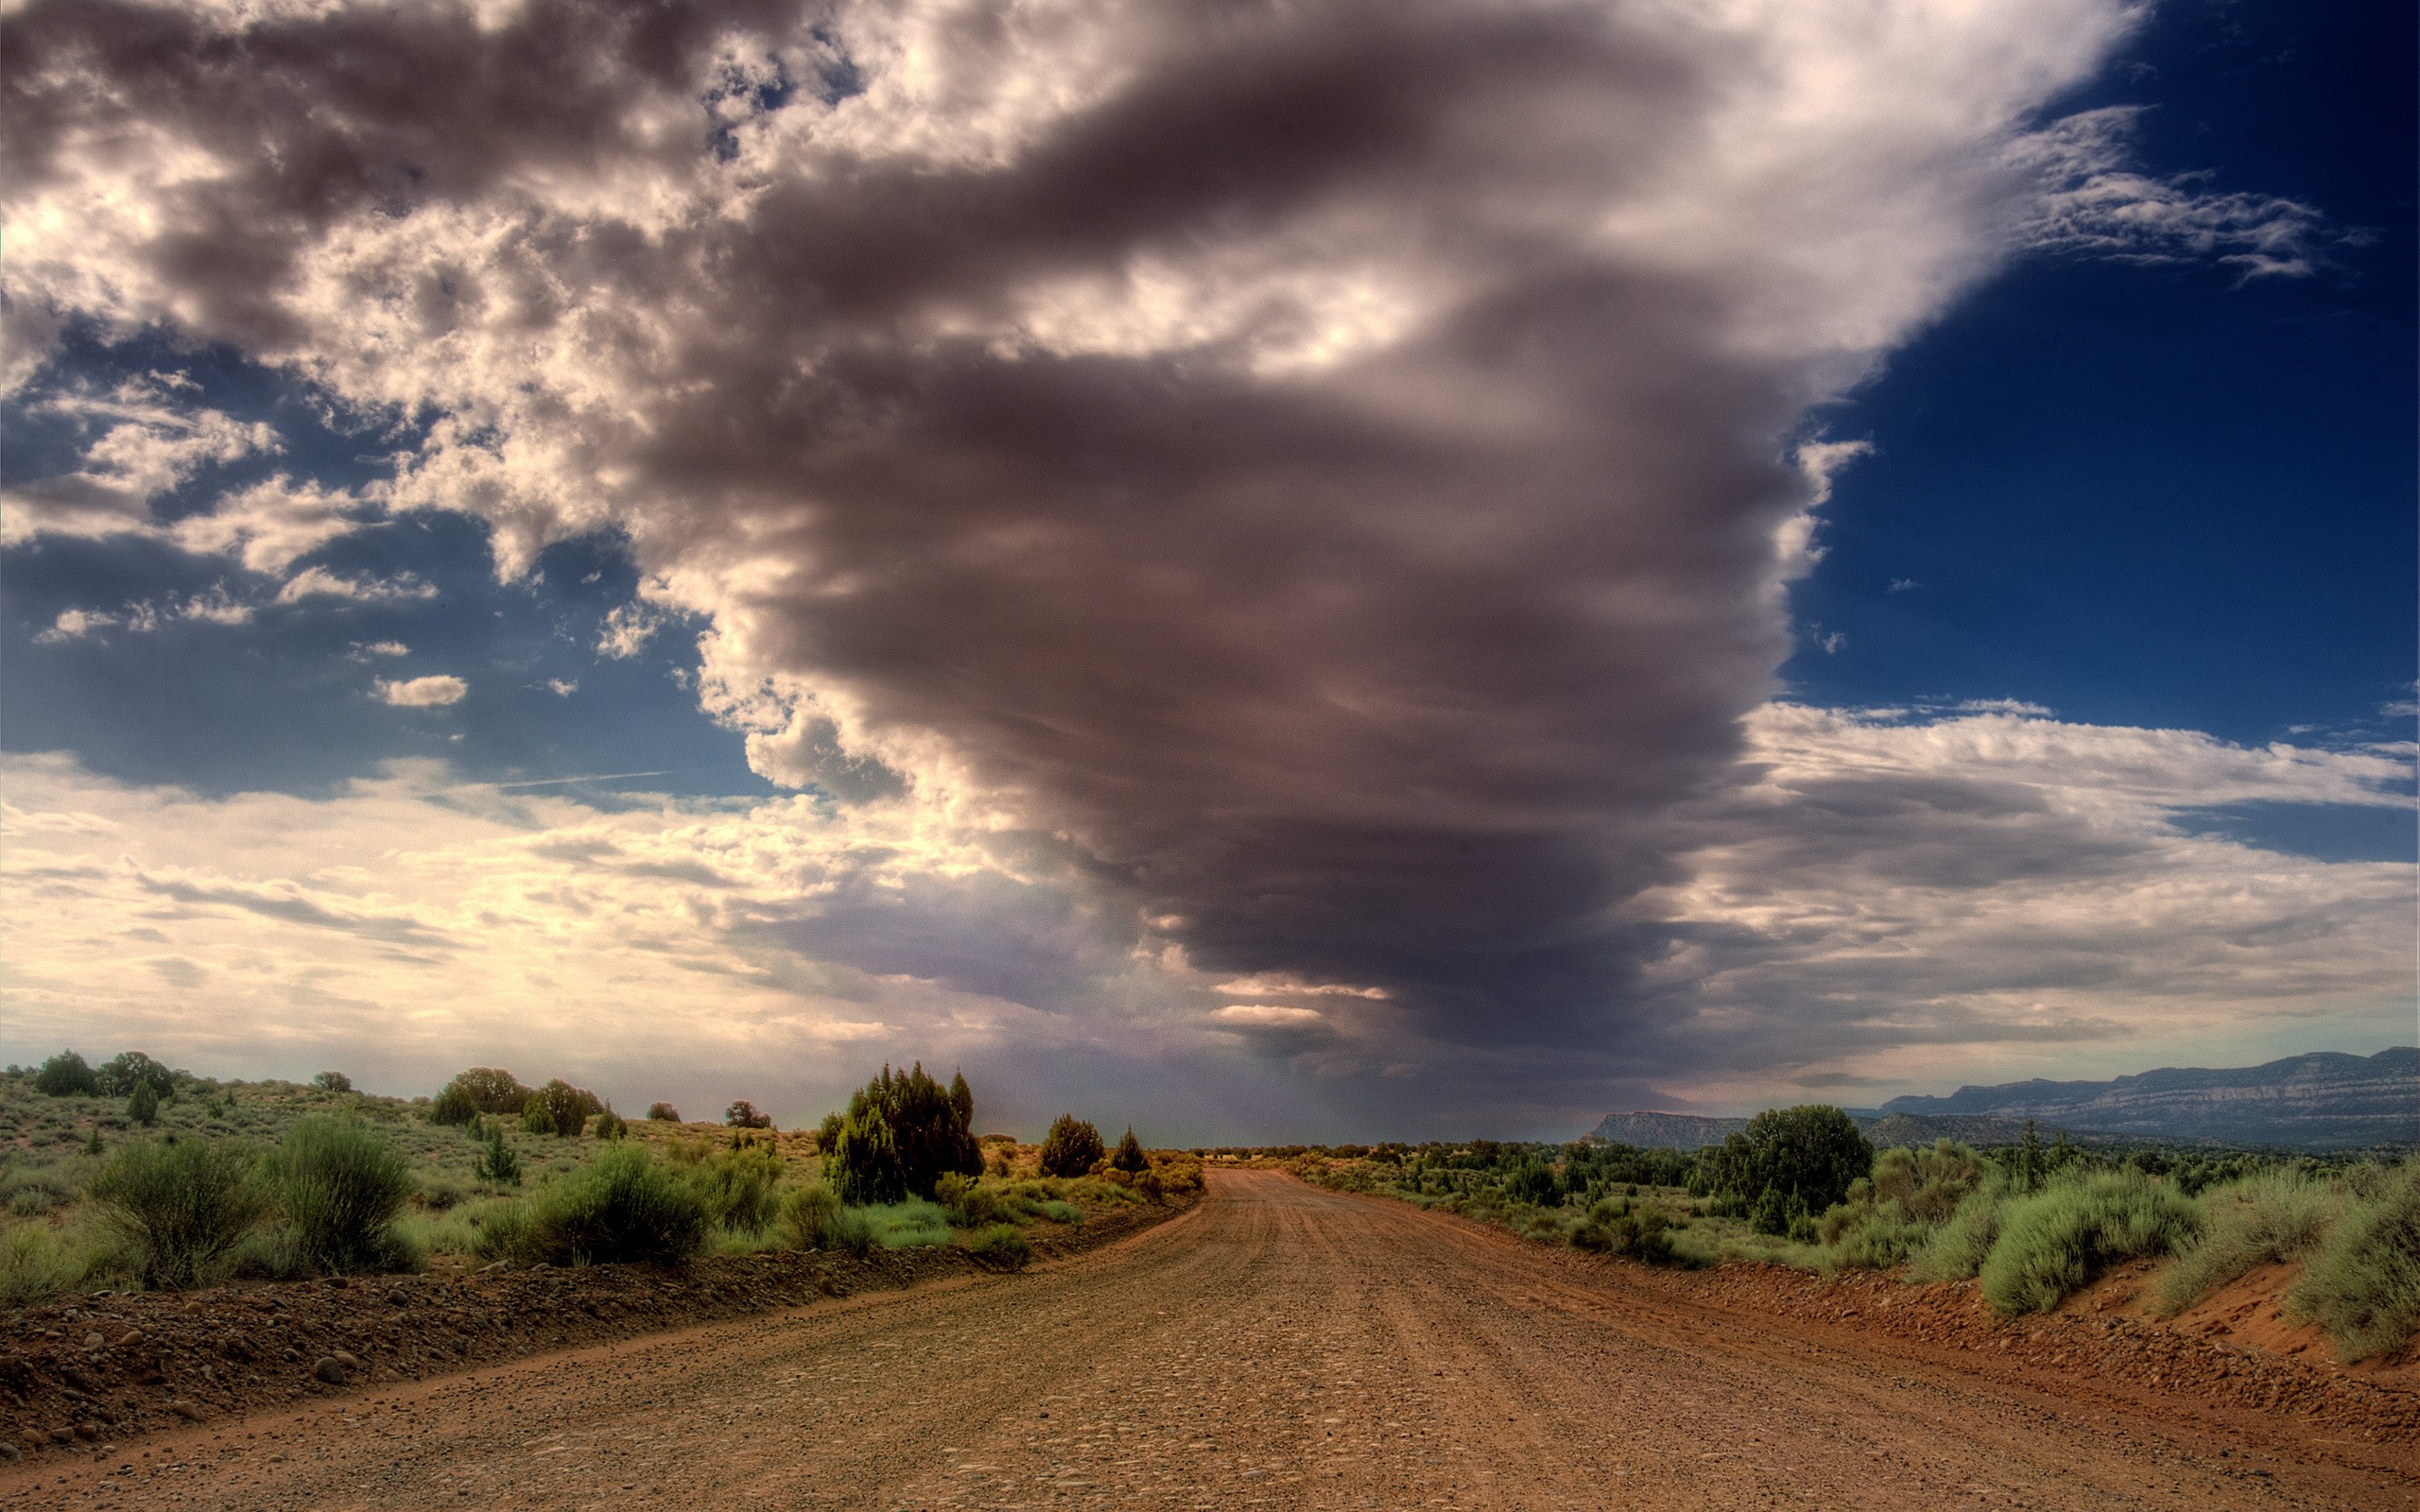 General 2560x1600 landscape dirt road clouds plains dirt shrubs Badlands (nature) sky road nature outdoors